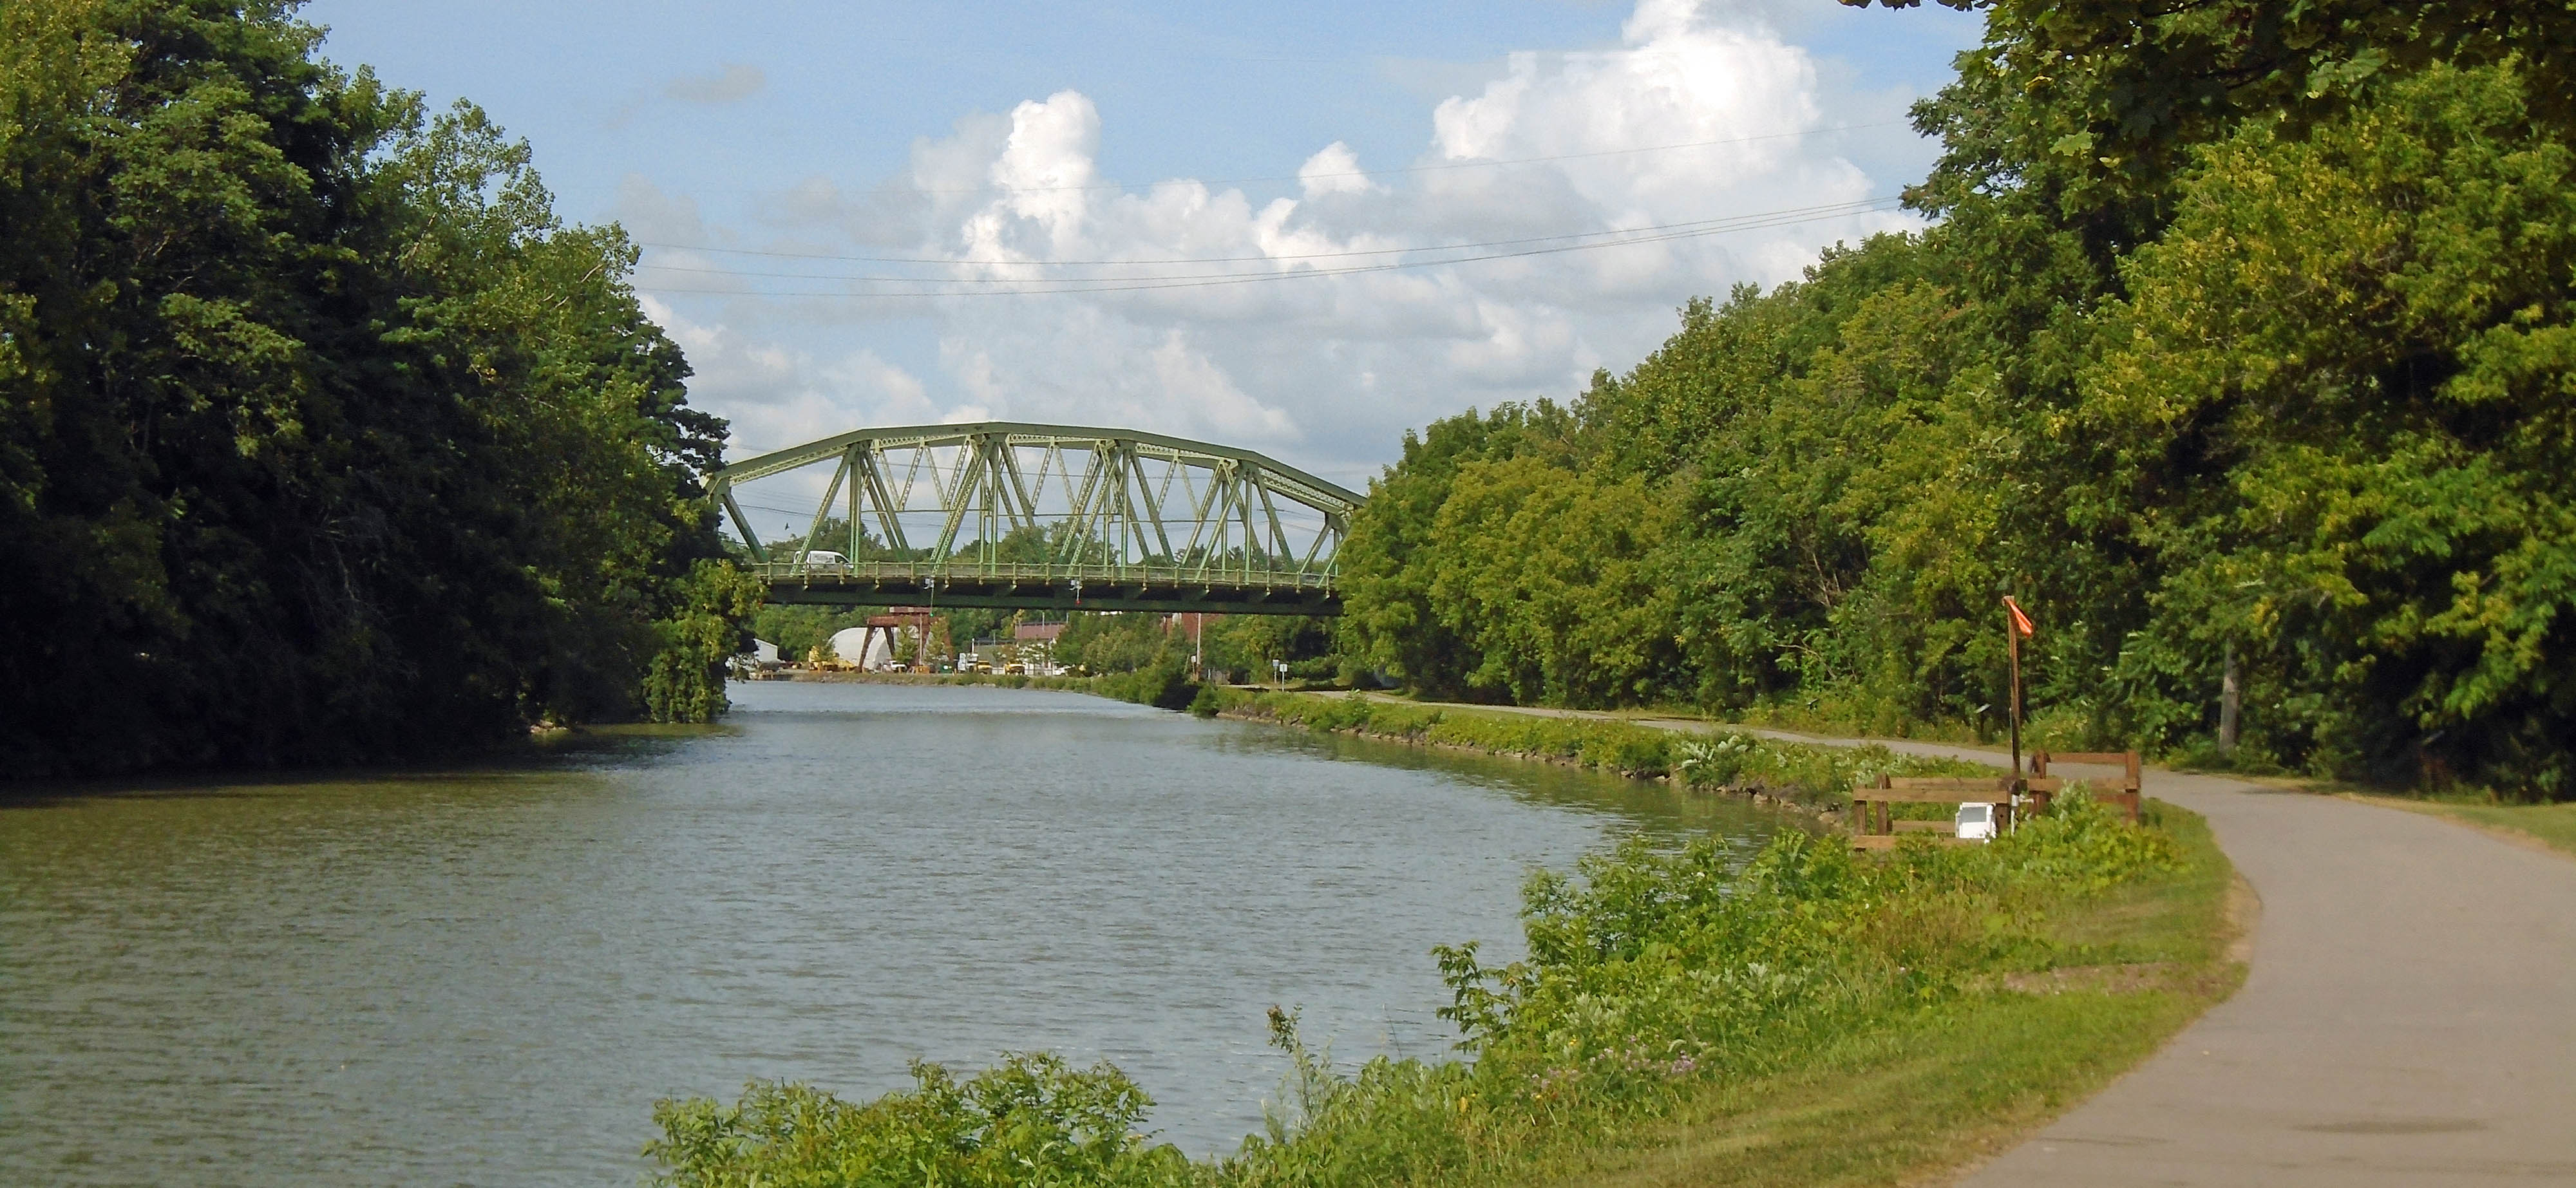 Monroe Ave. Bridge across the Erie Canal, Pittsford